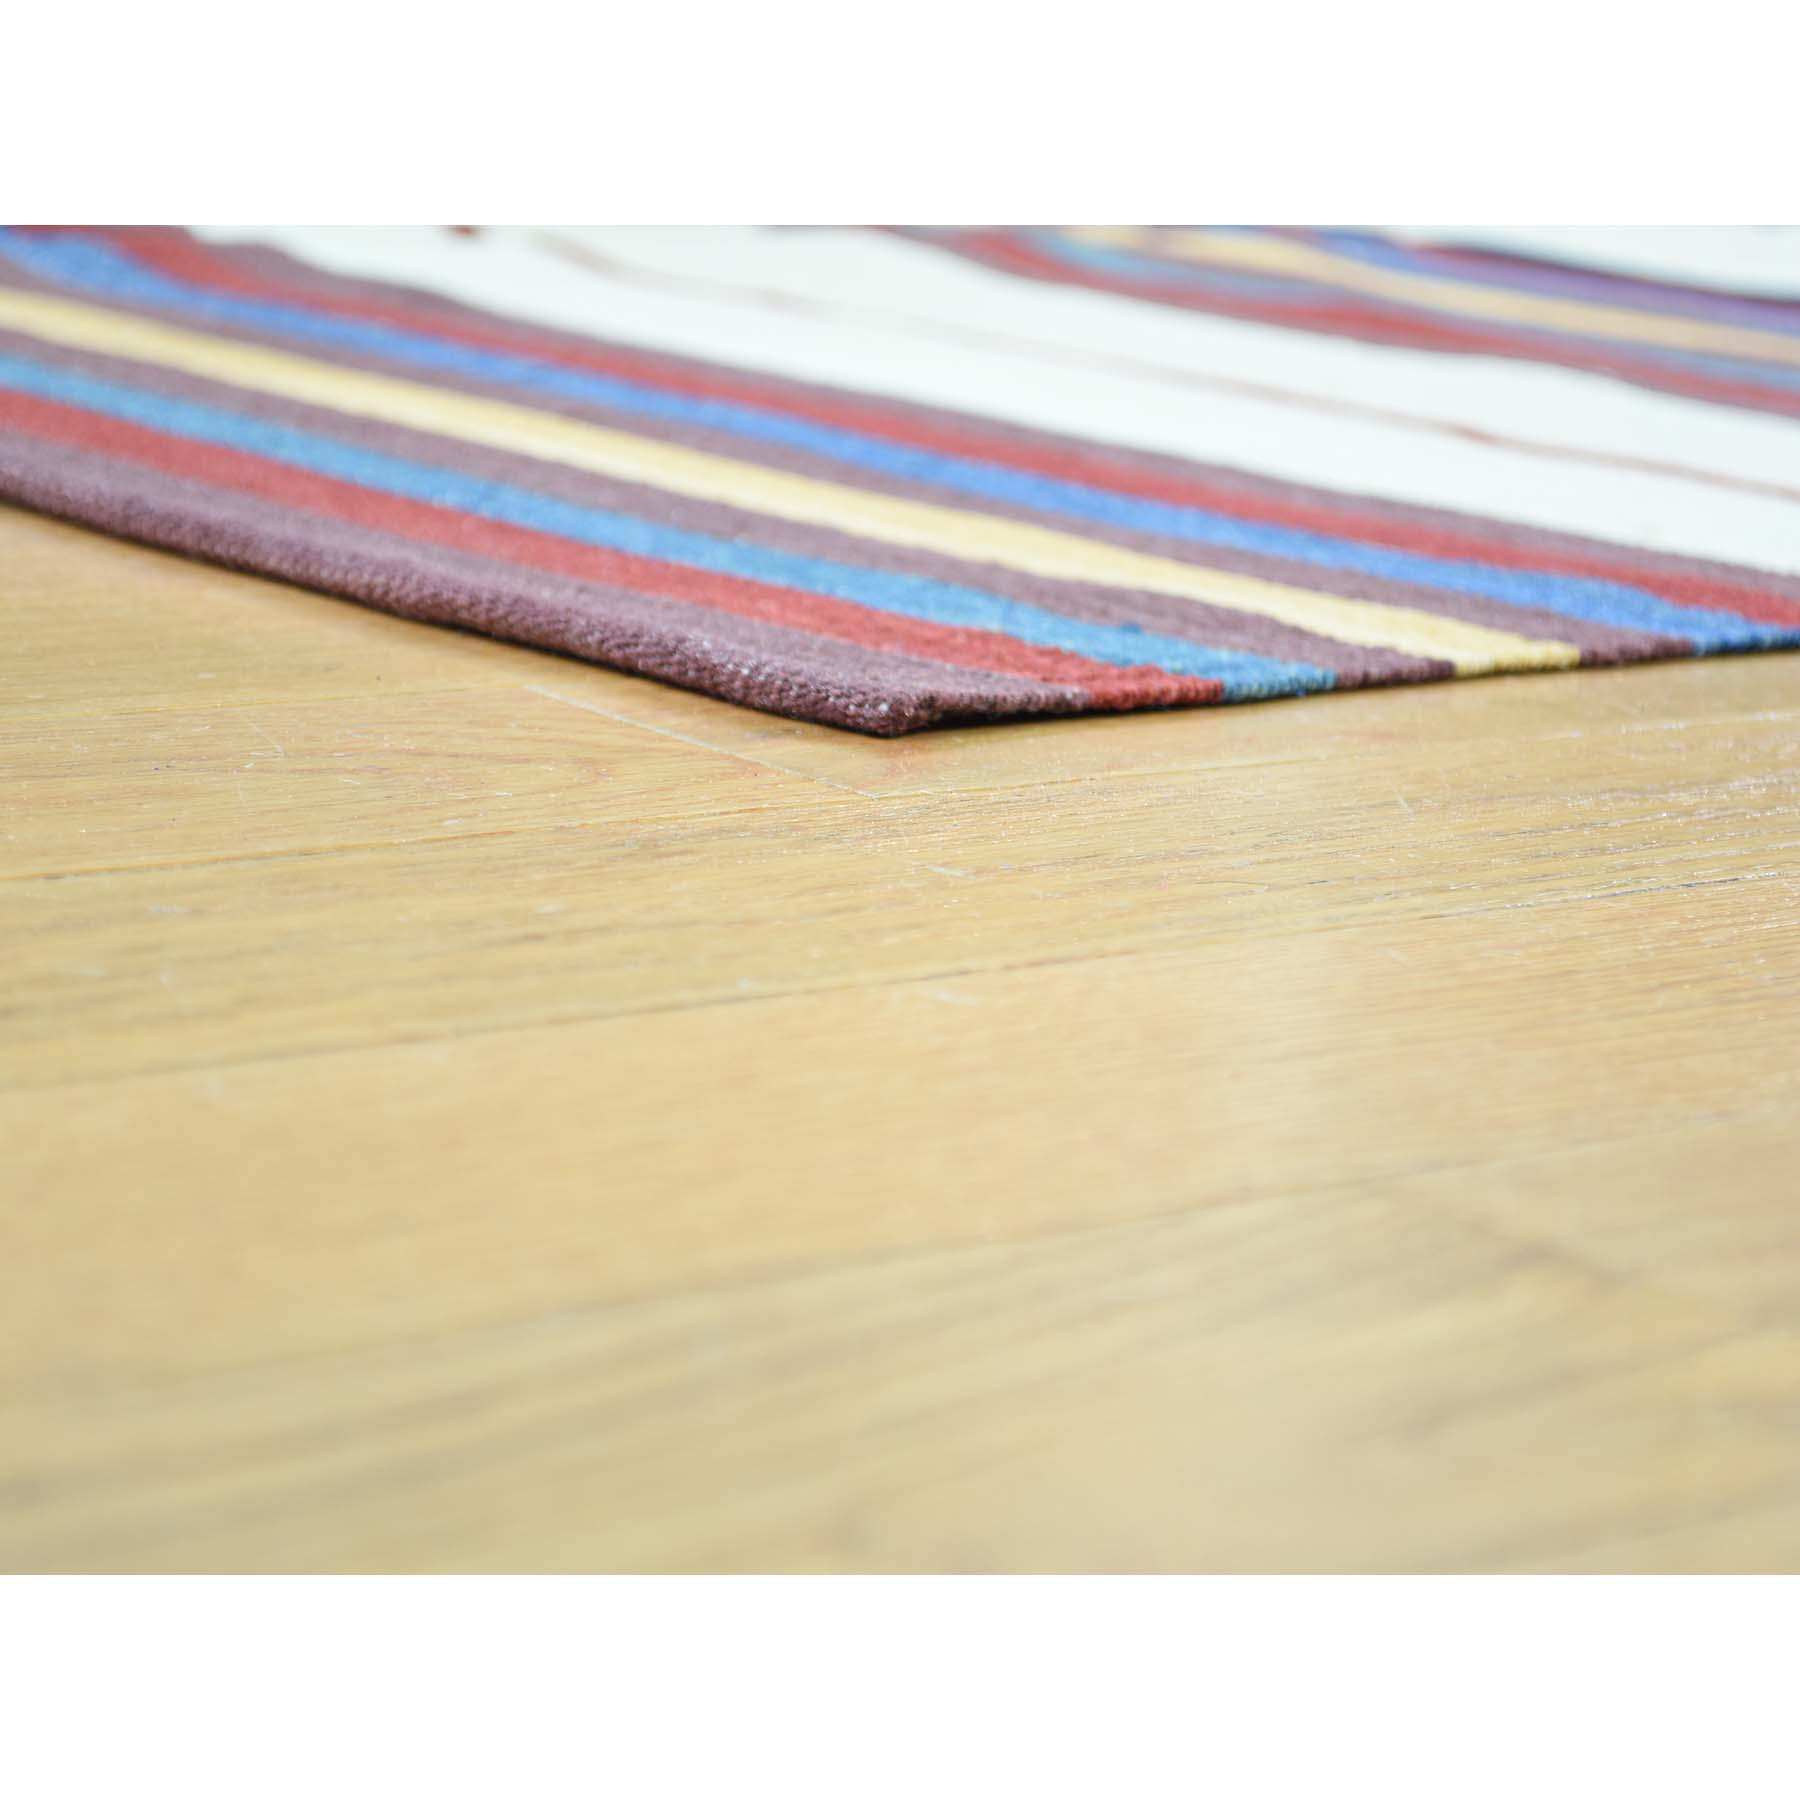 8-3 x10-4  Hand-Woven Striped Flat Weave Qashqai Kilim Oriental Rug 